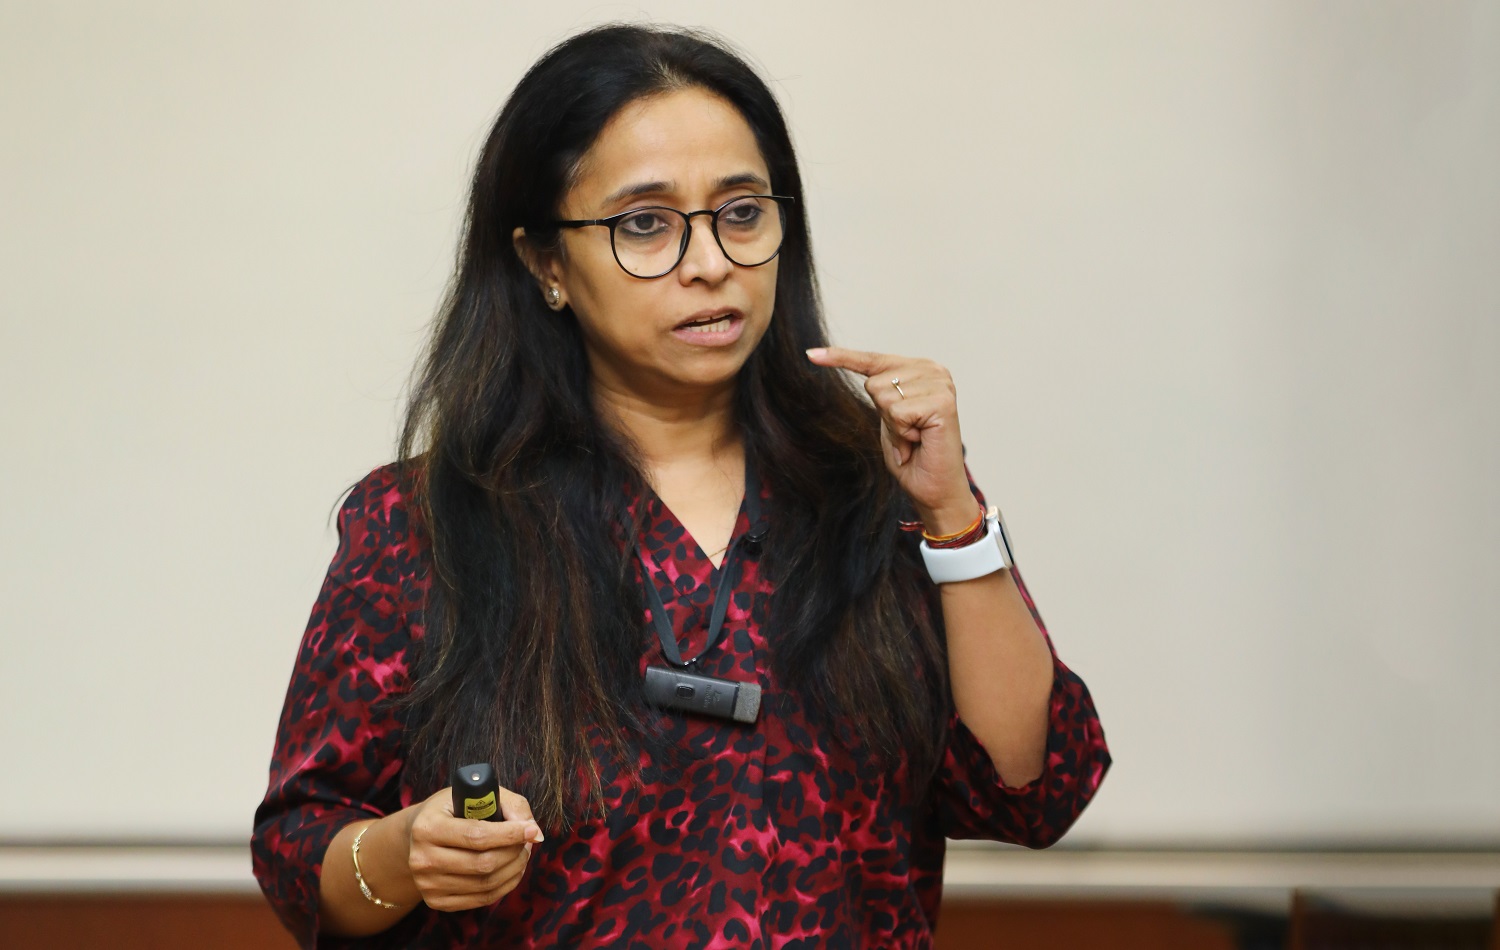 Shweta Shandilya, Executive Director, Data Management and Governance, IBM, spoke on 'Data, Data Governance and AI' at WiDS Bengaluru Conference.